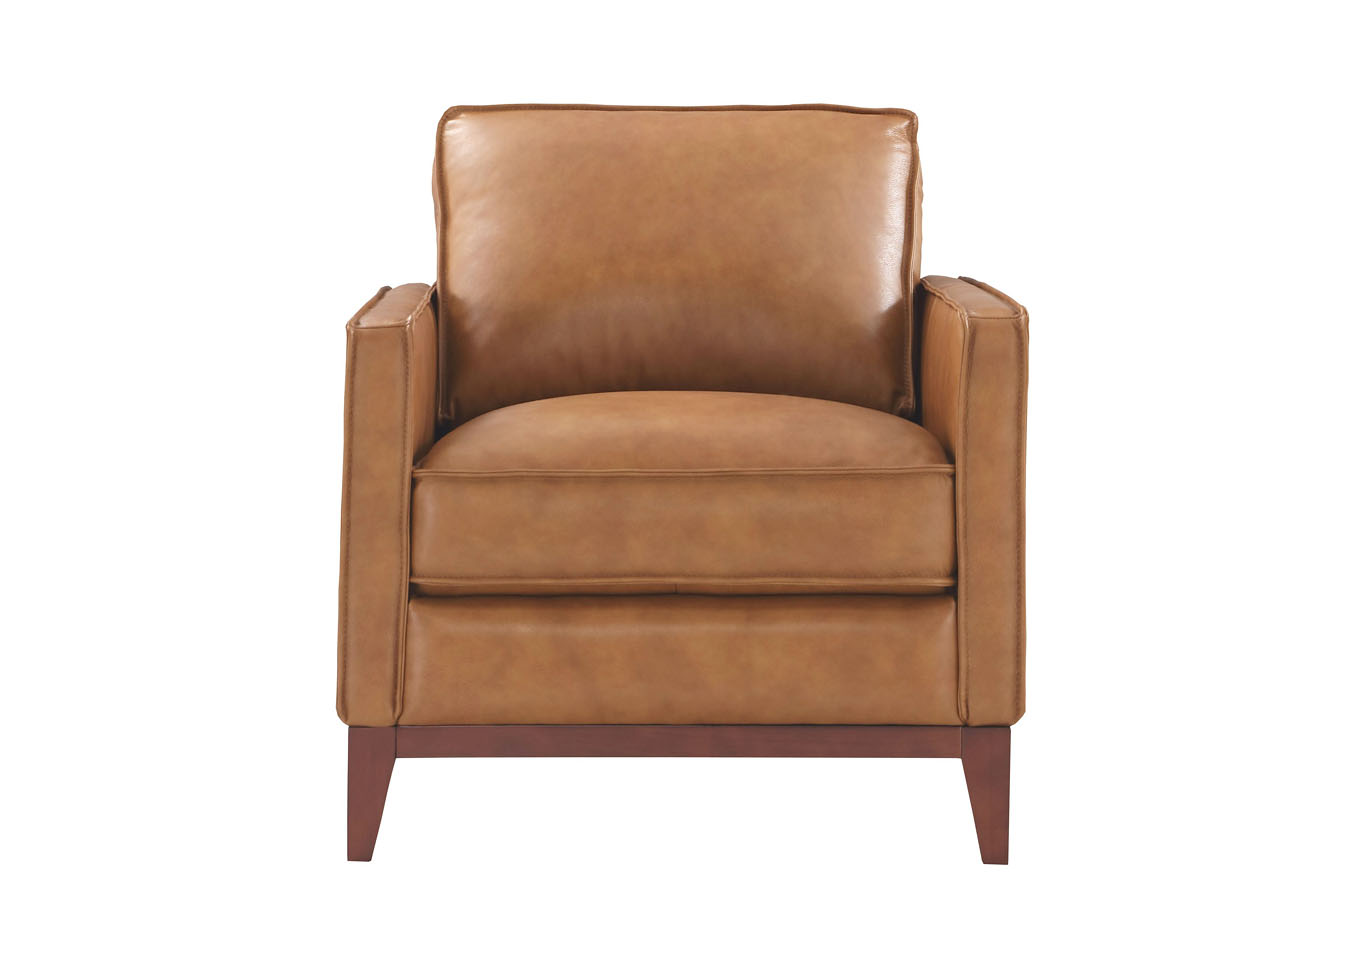 Carlsbad Leather Carmel Color sofa and chair